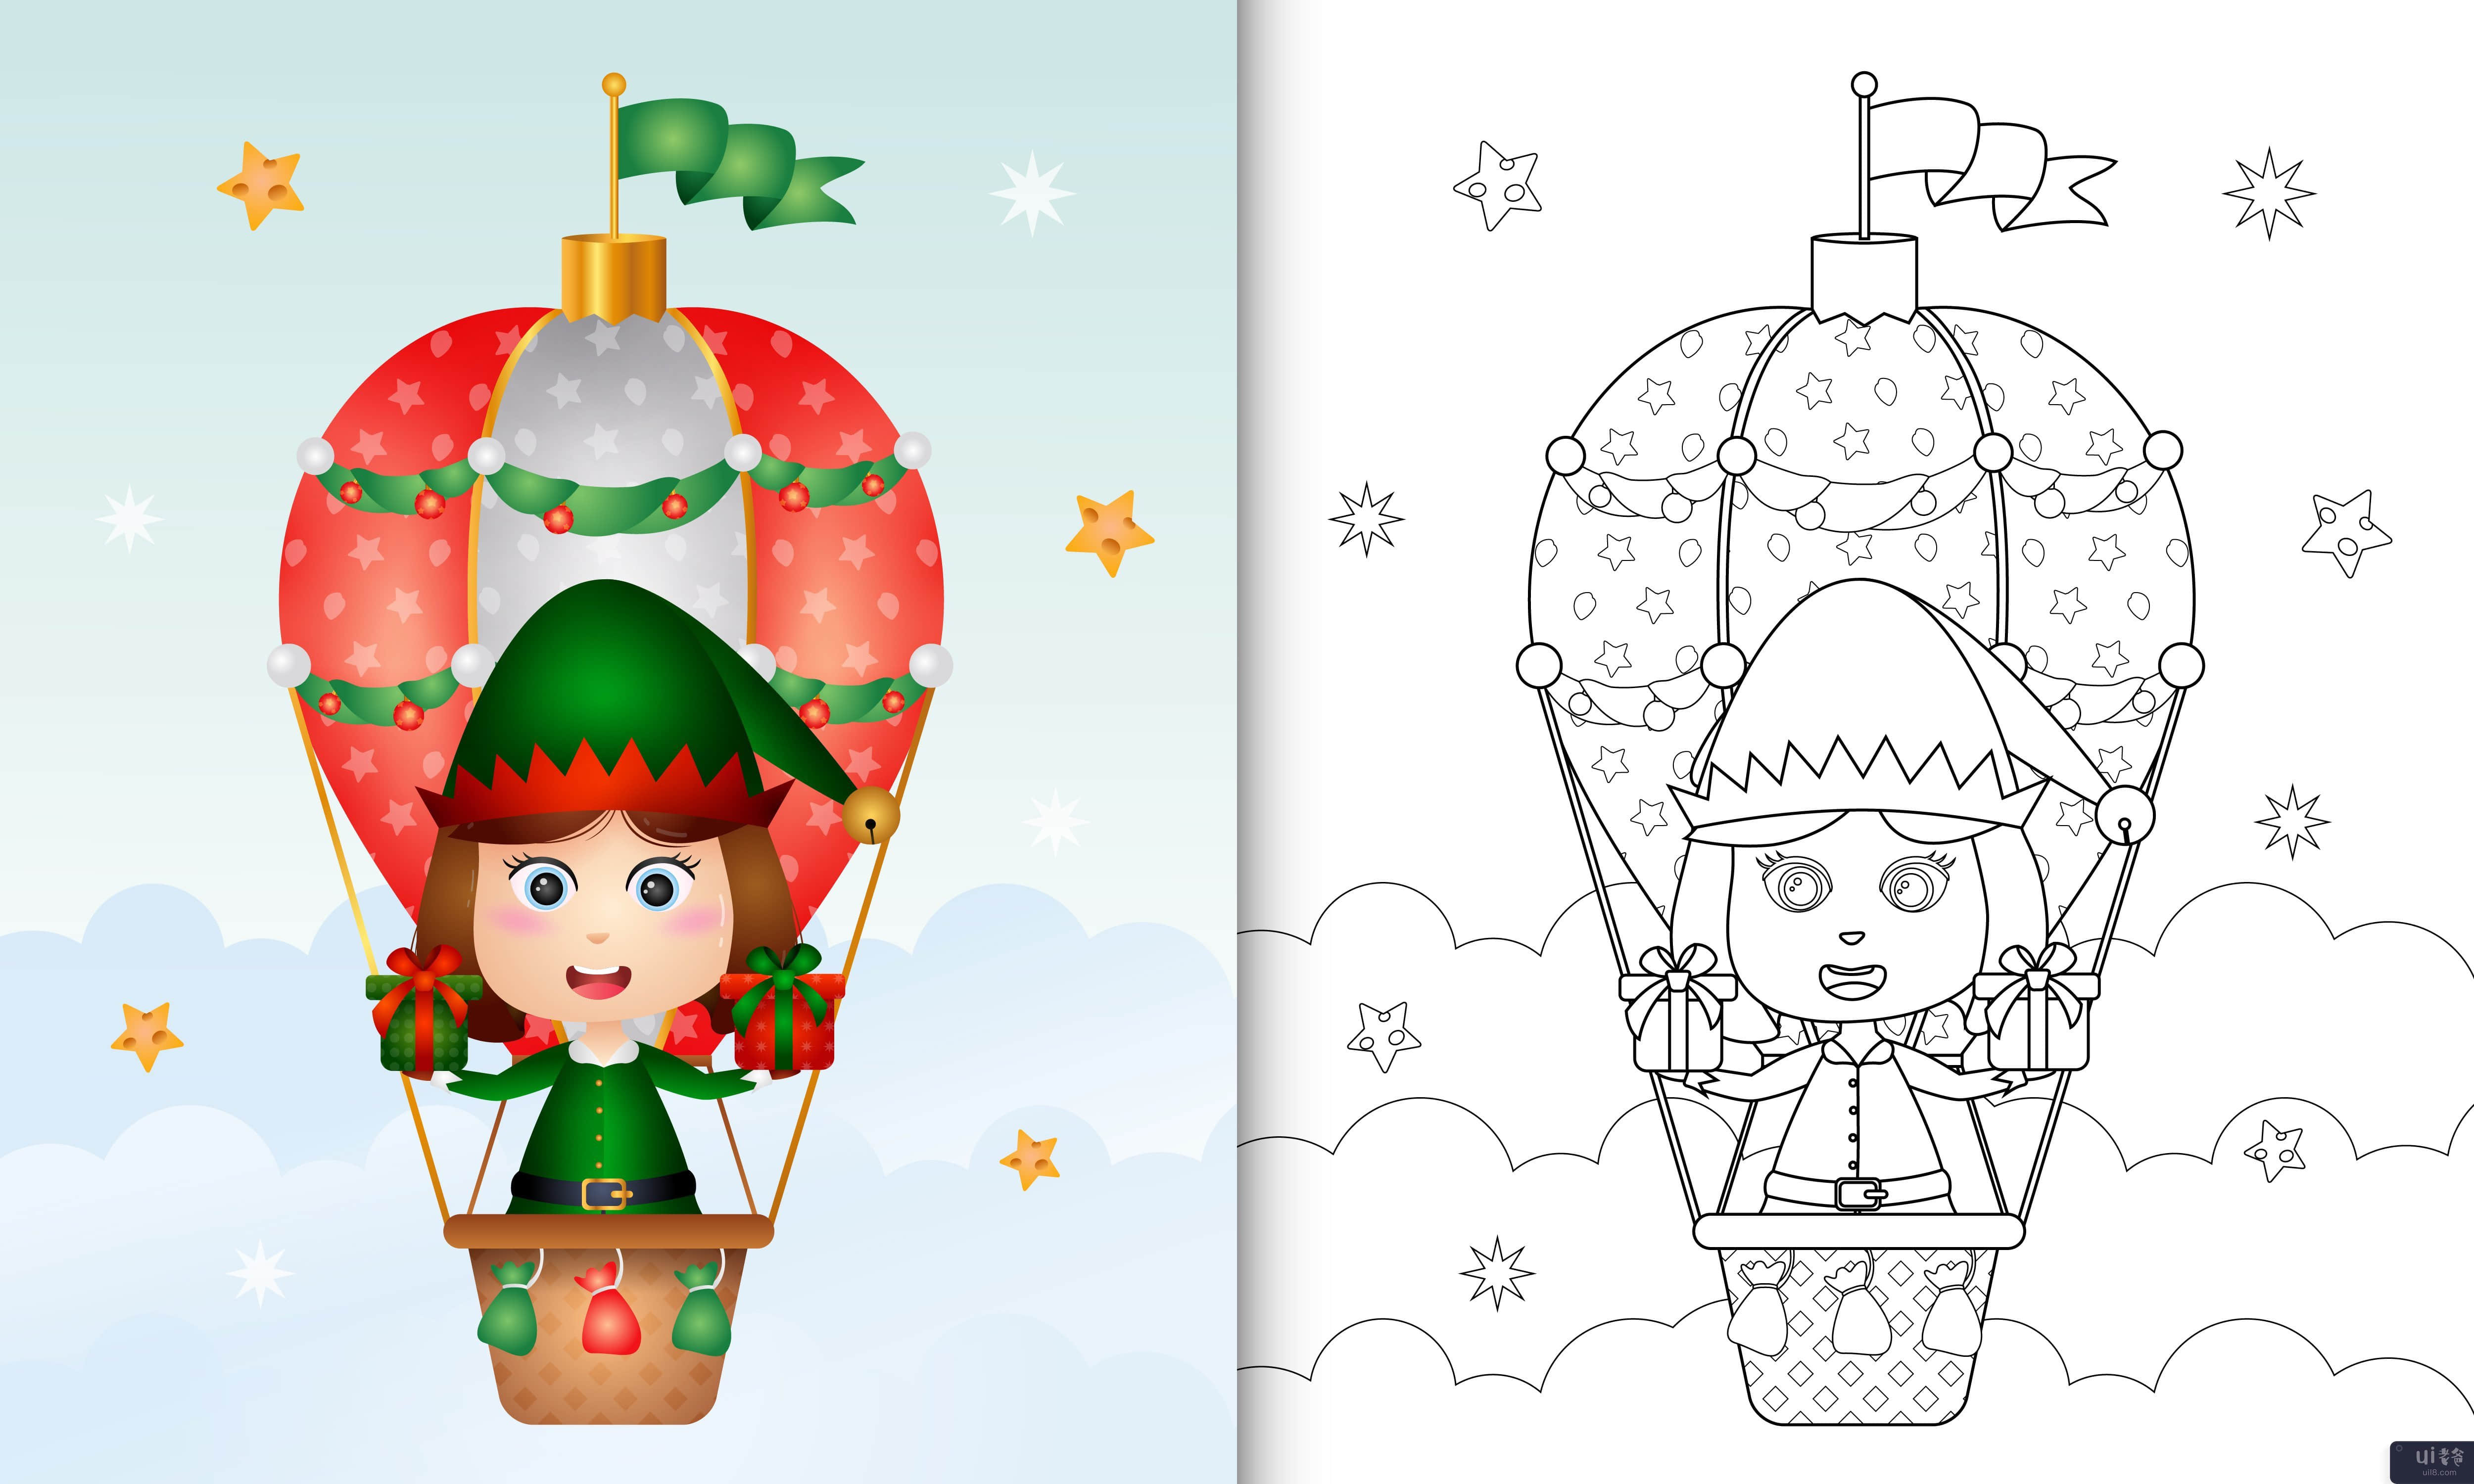 着色书与可爱的女孩精灵圣诞人物(coloring book with a cute girl elf christmas characters)插图2